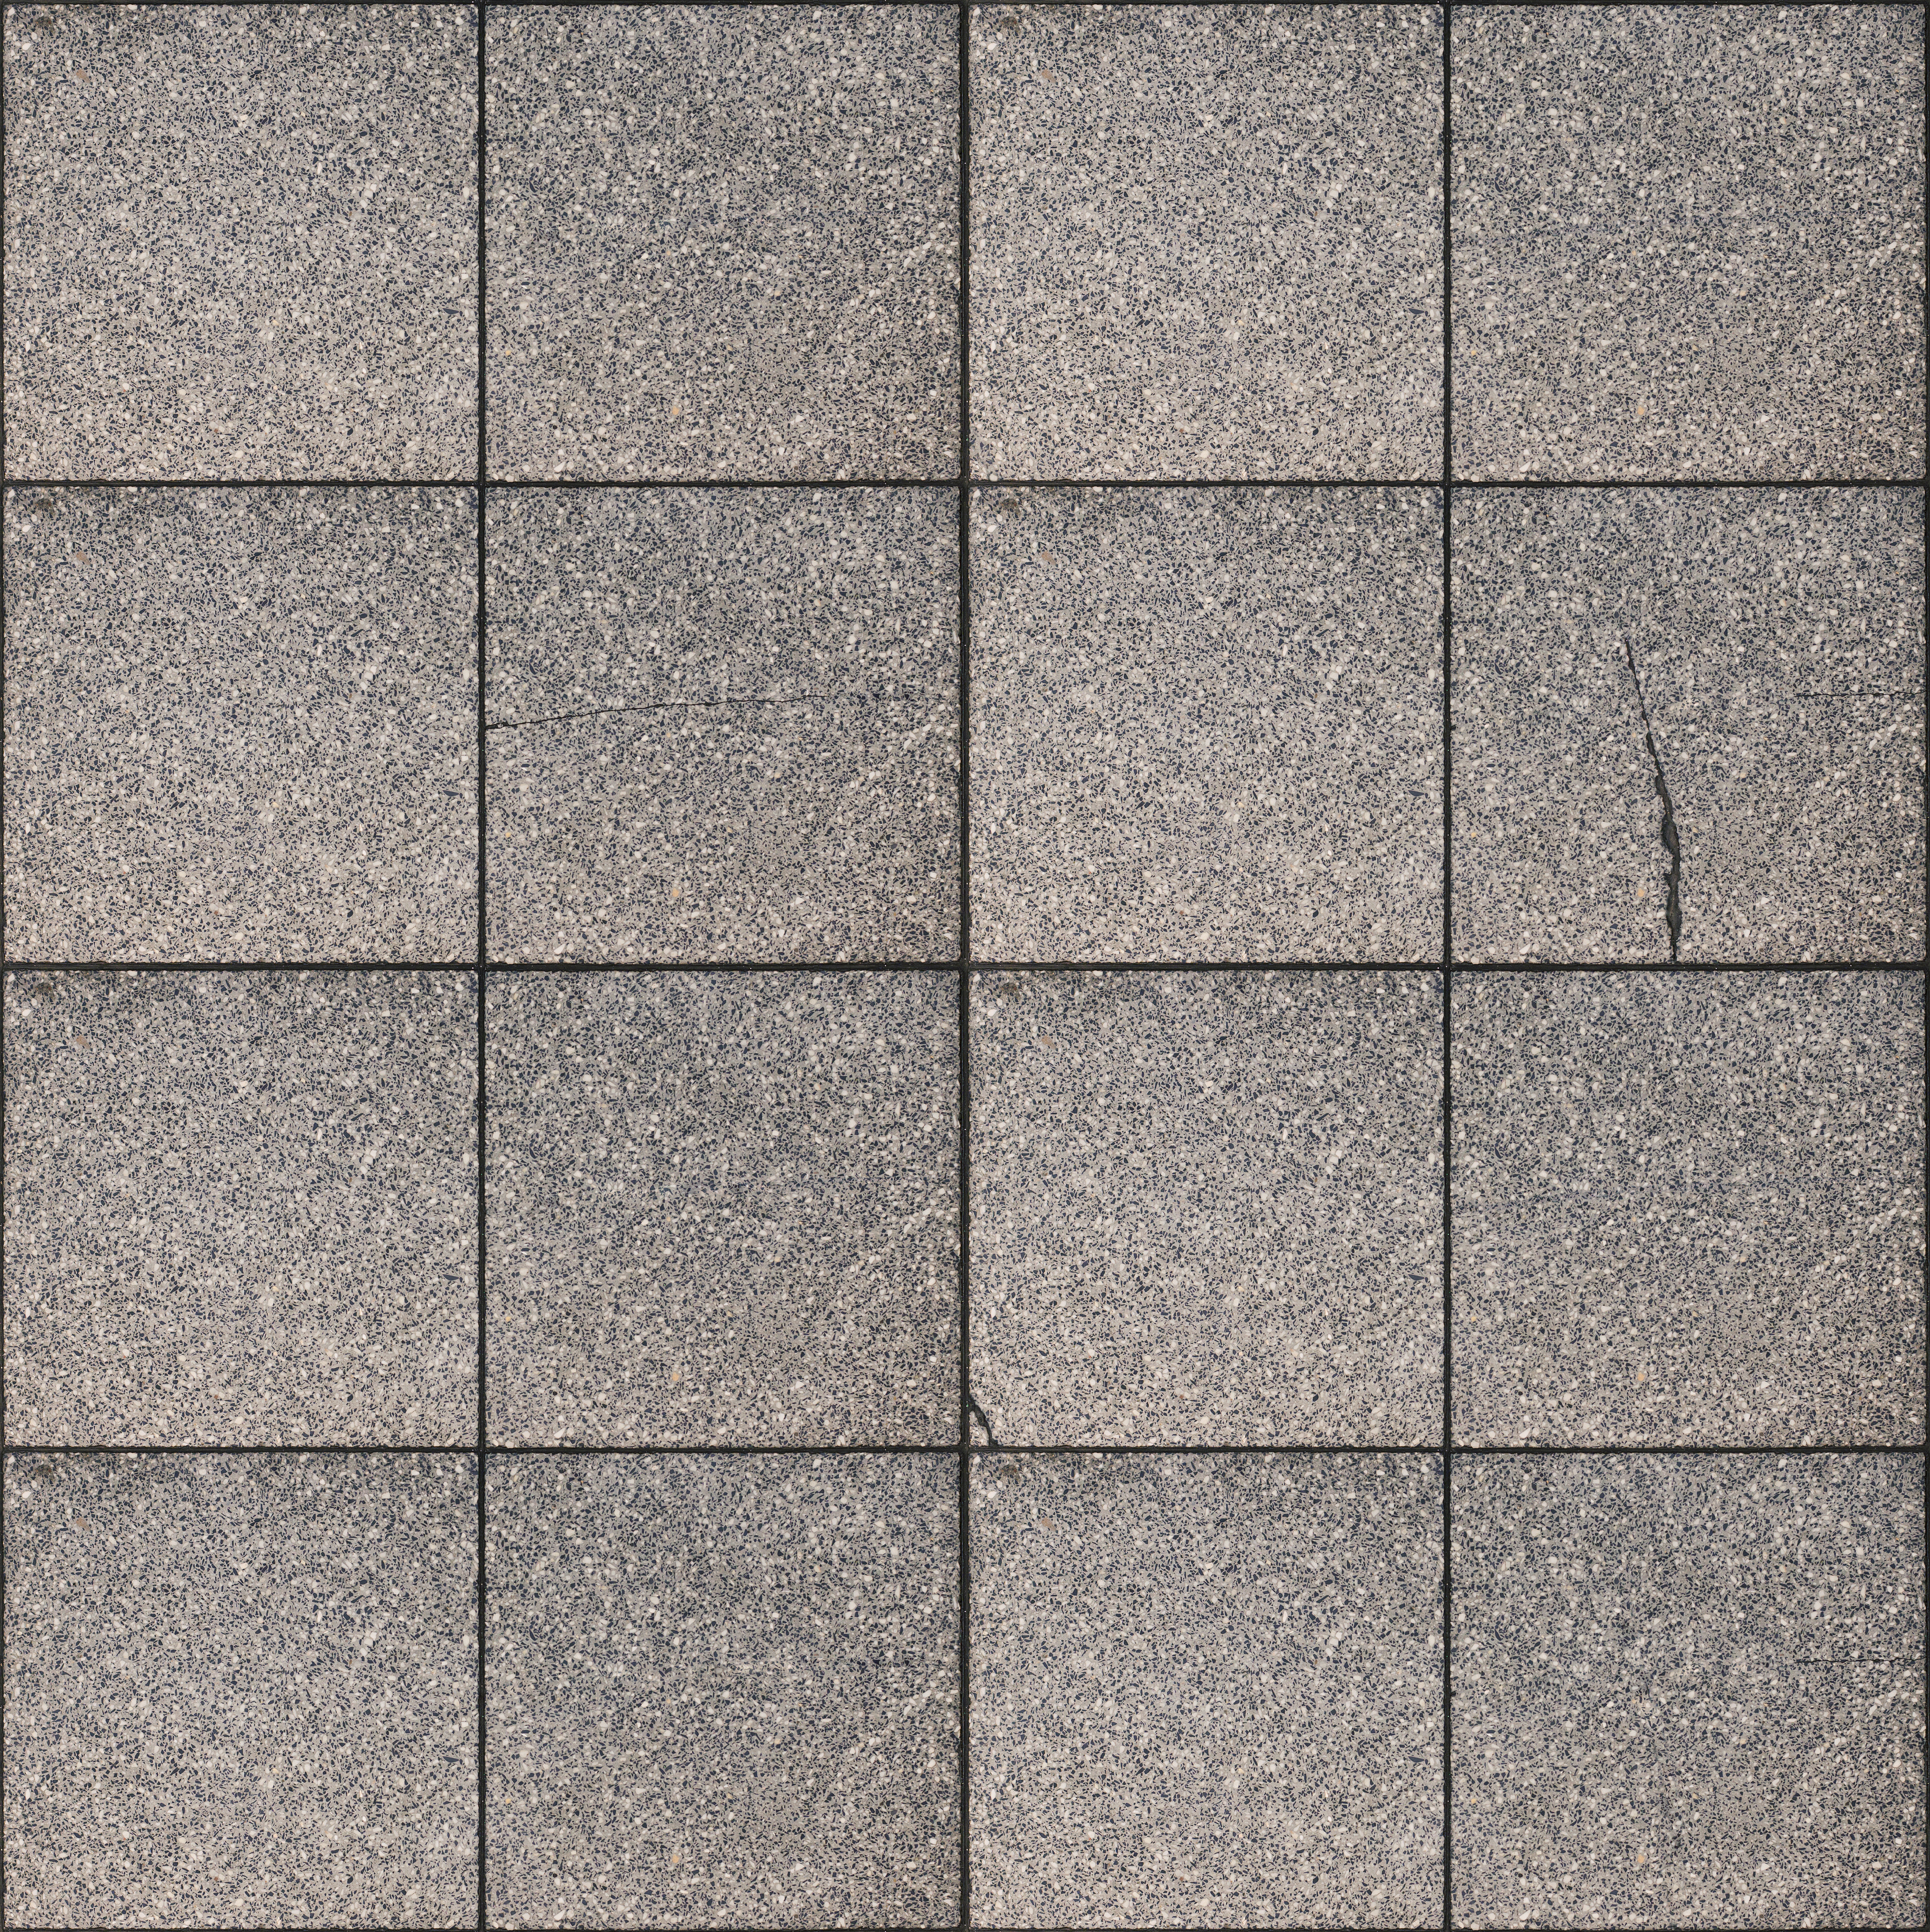 Granite Flooring Tiles Texture